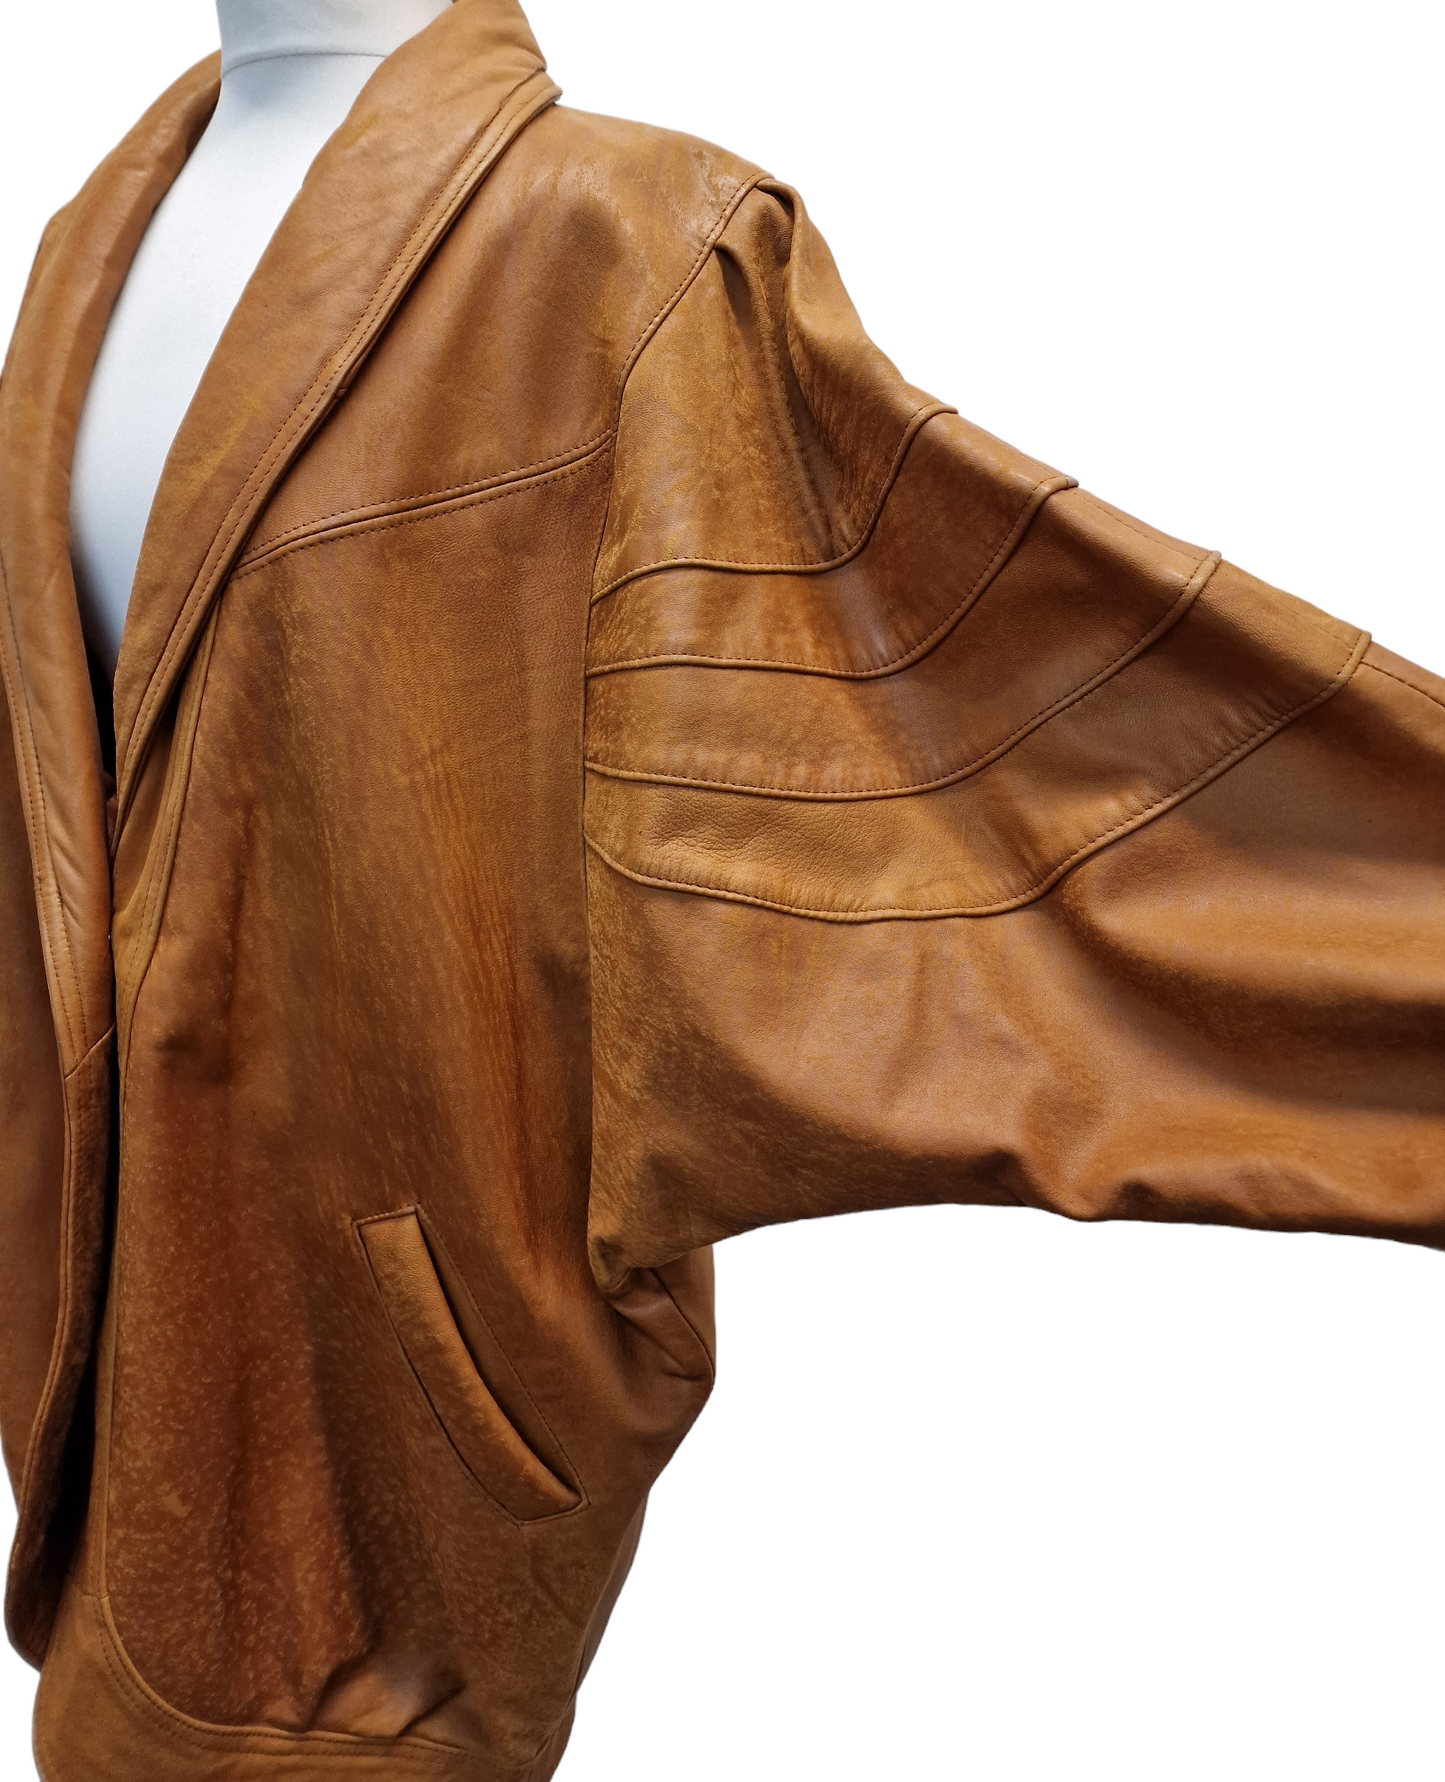 Vintage Tan Leather Batwing Jacket - Medium